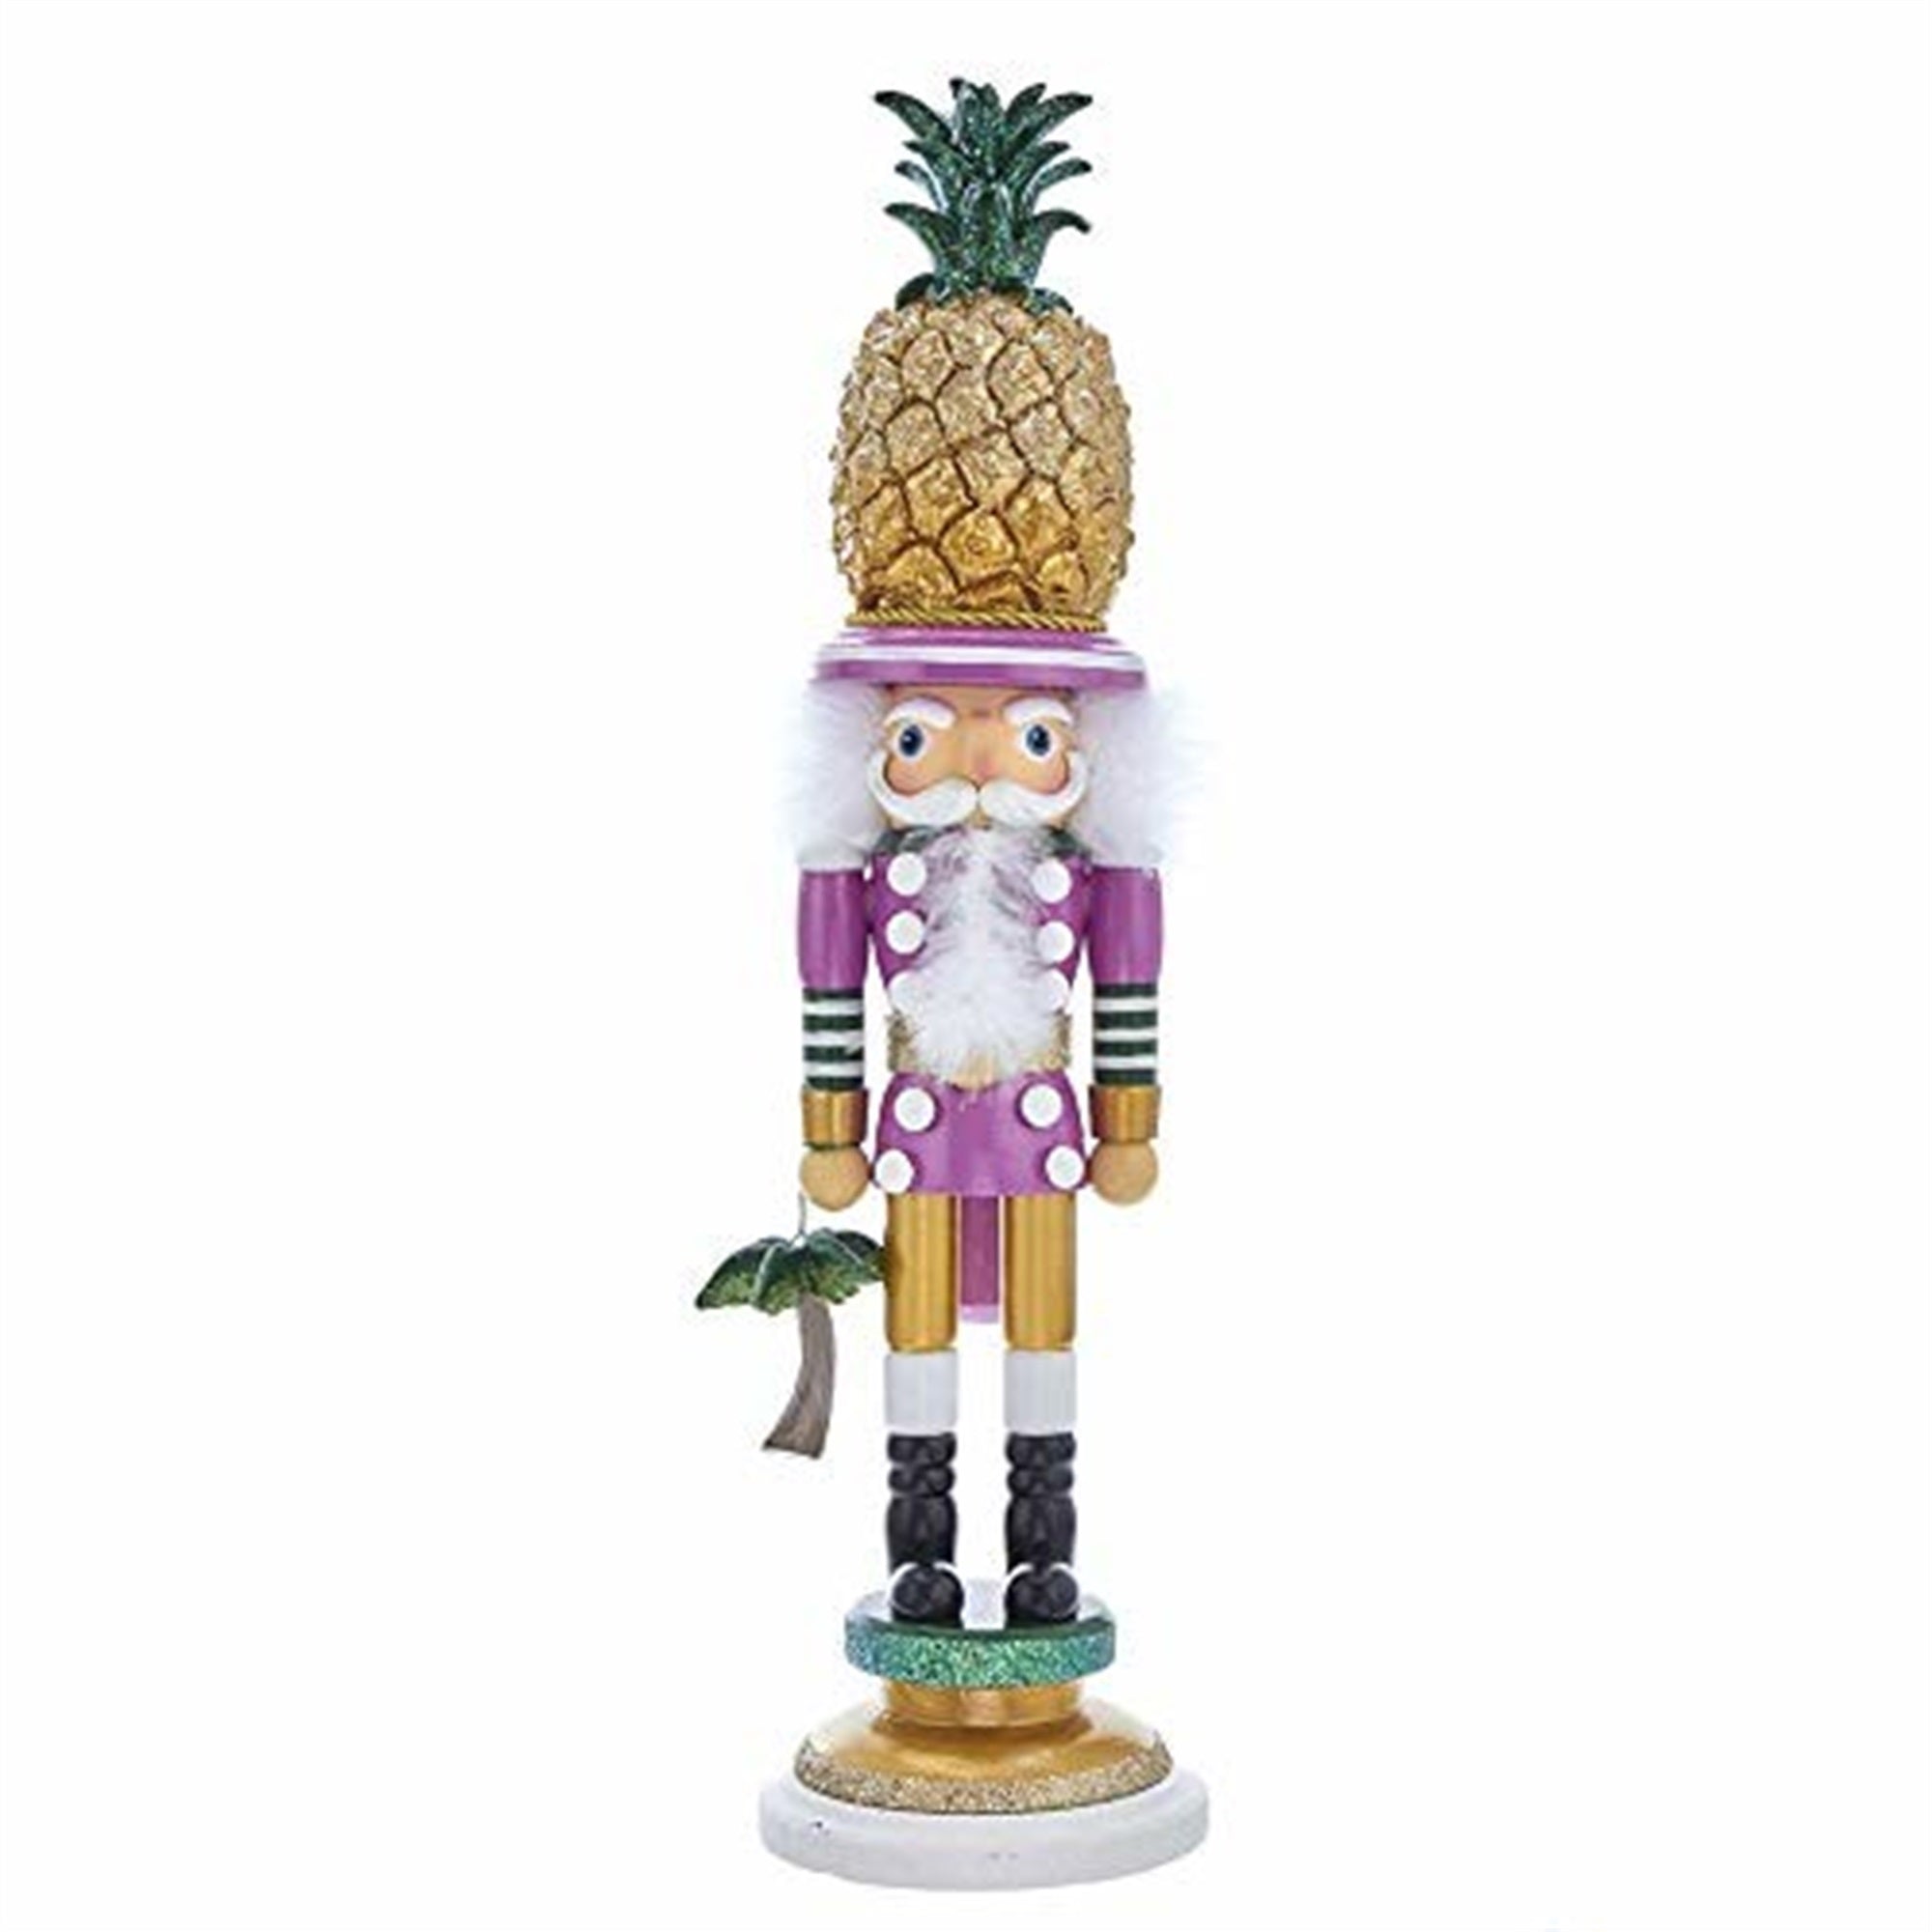 Kurt Adler Hollywood Nutcracker Collection, Pineapple Hat Nutcracker, 19.5"